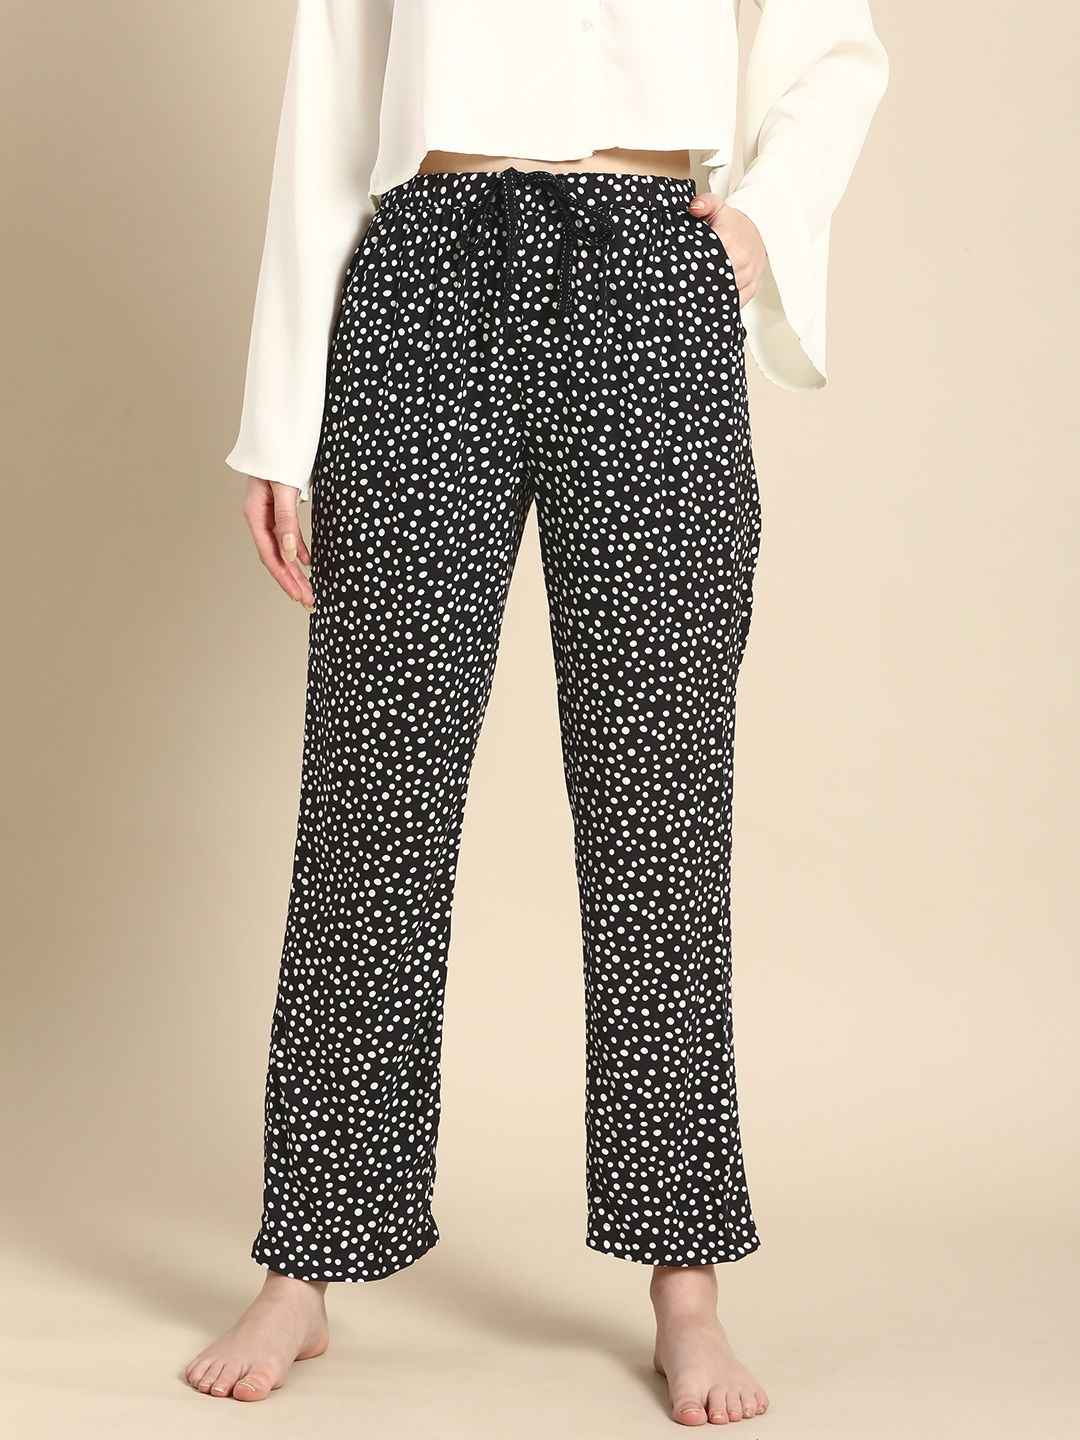 Dreamz by Pantaloons Women Black & White Polka Dots Printed Lounge Pants Price in India